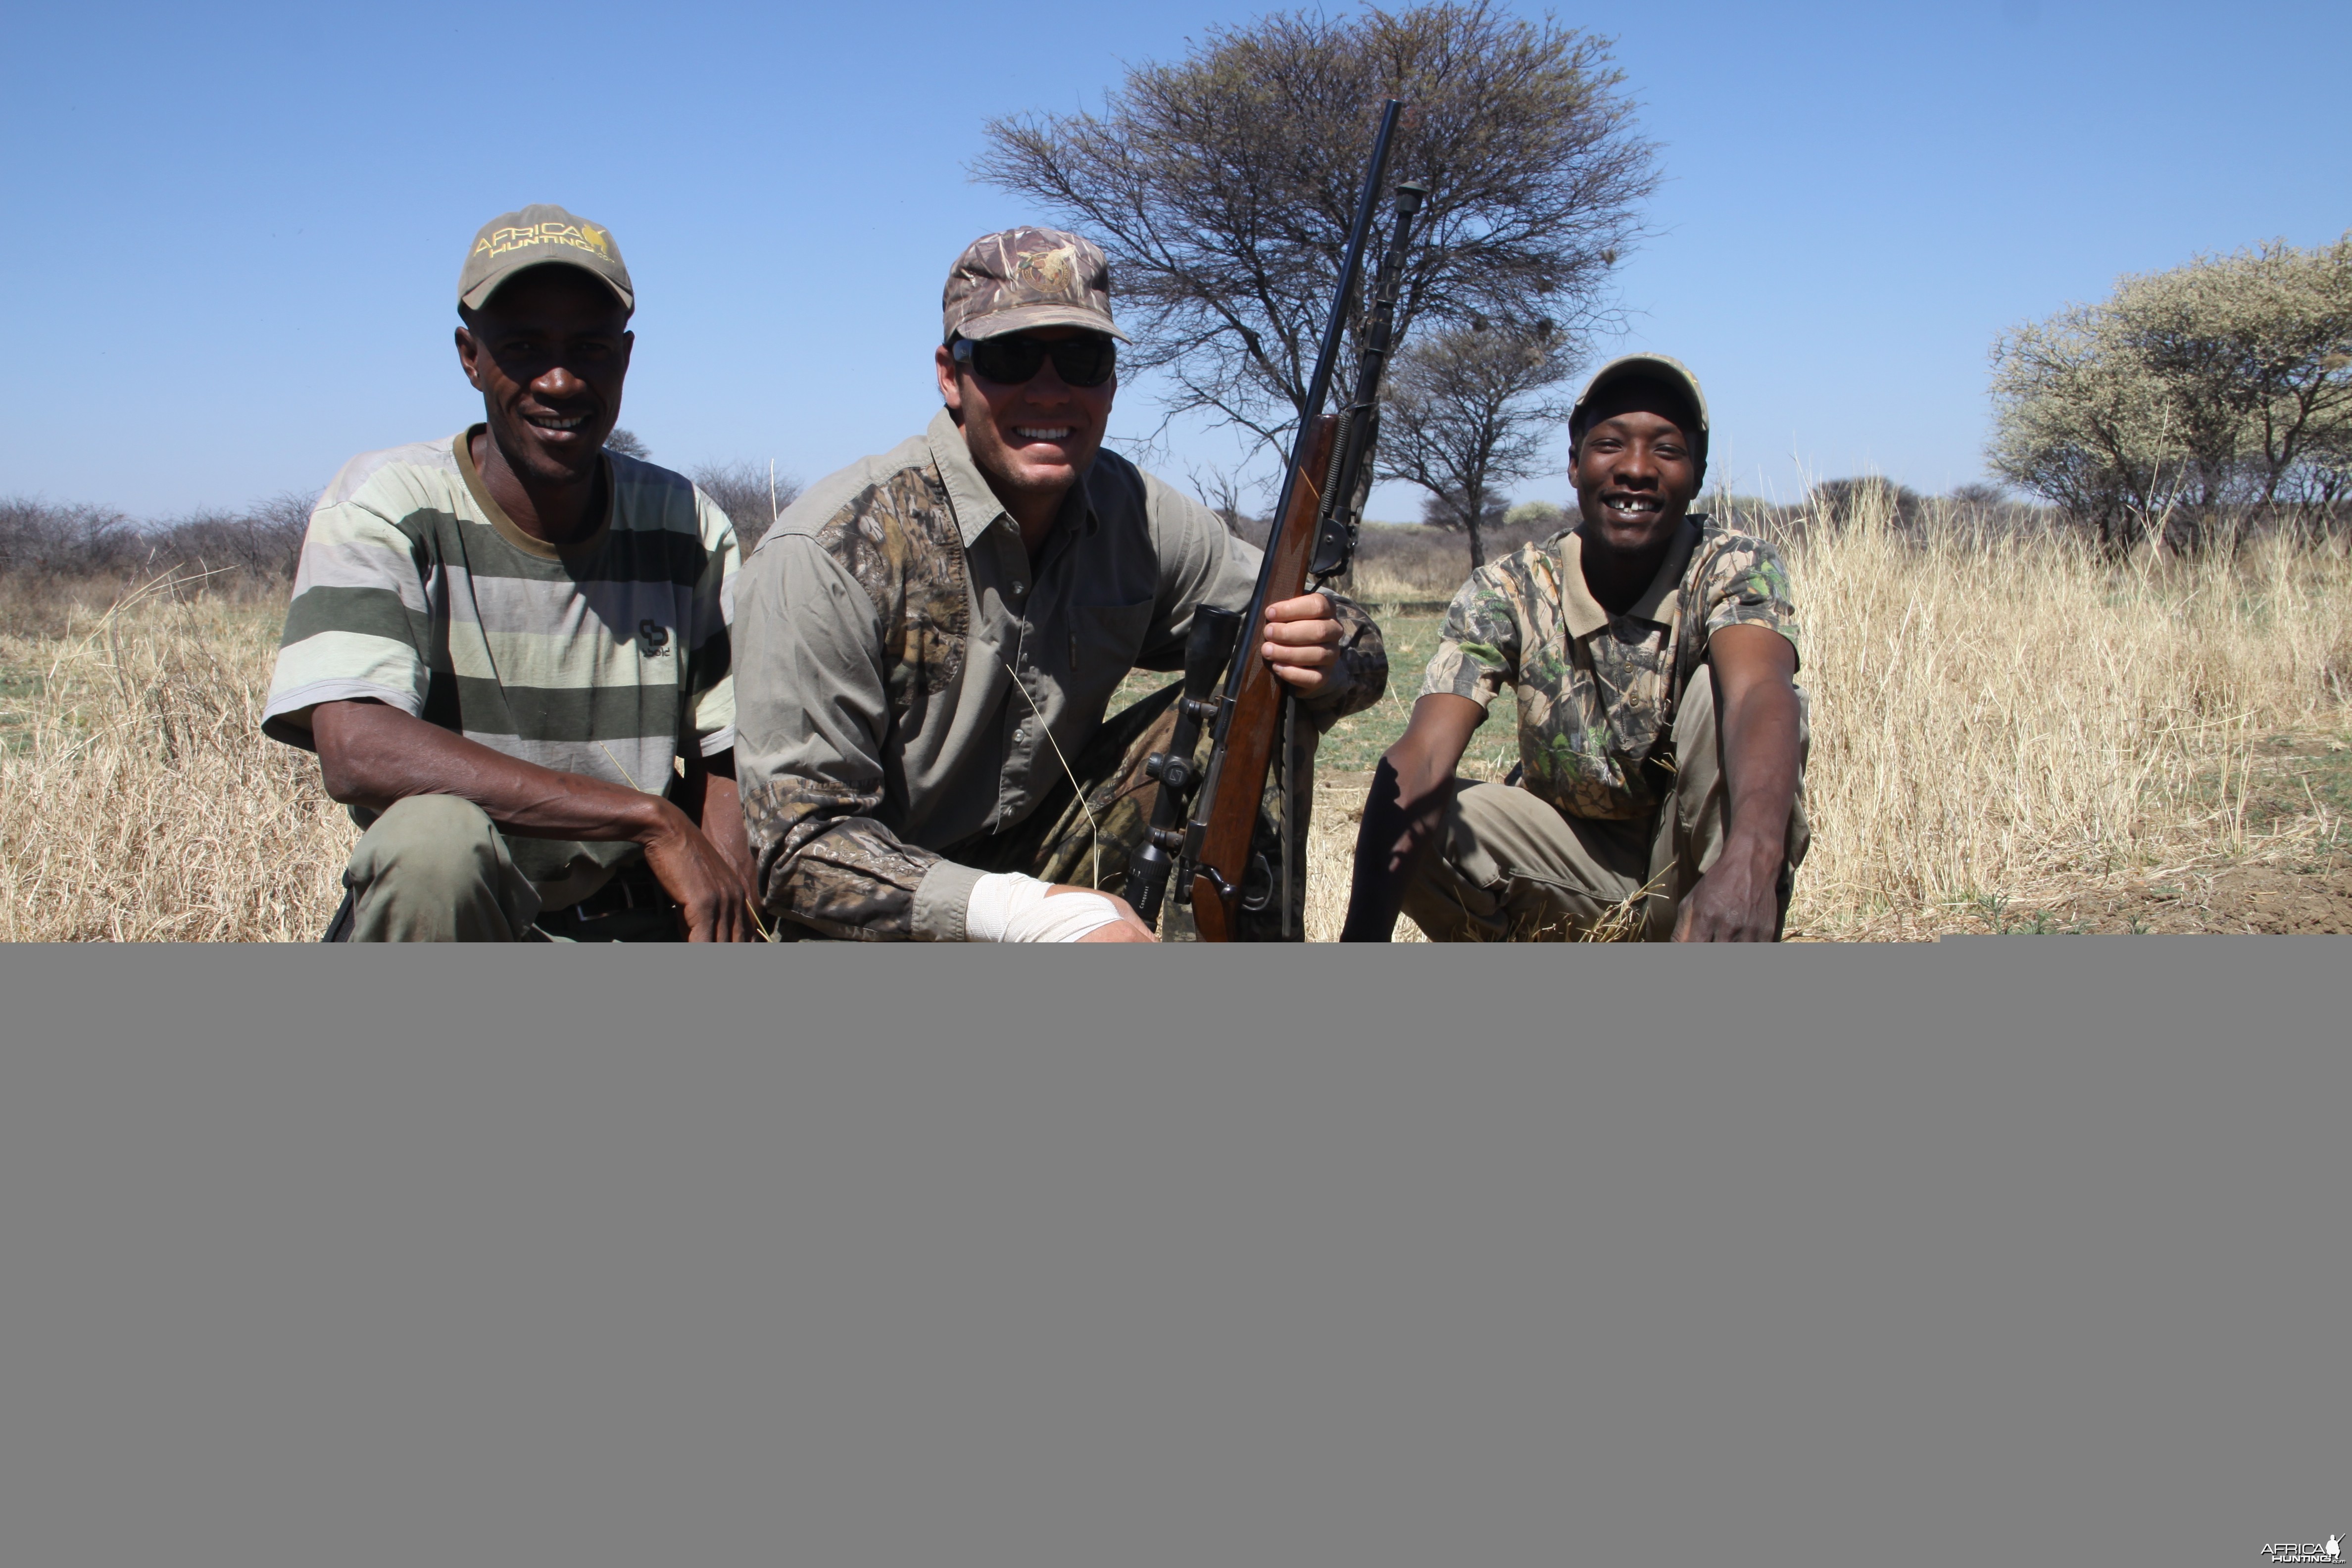 Jackal hunted with Ozondjahe Hunting Safaris in Namibia